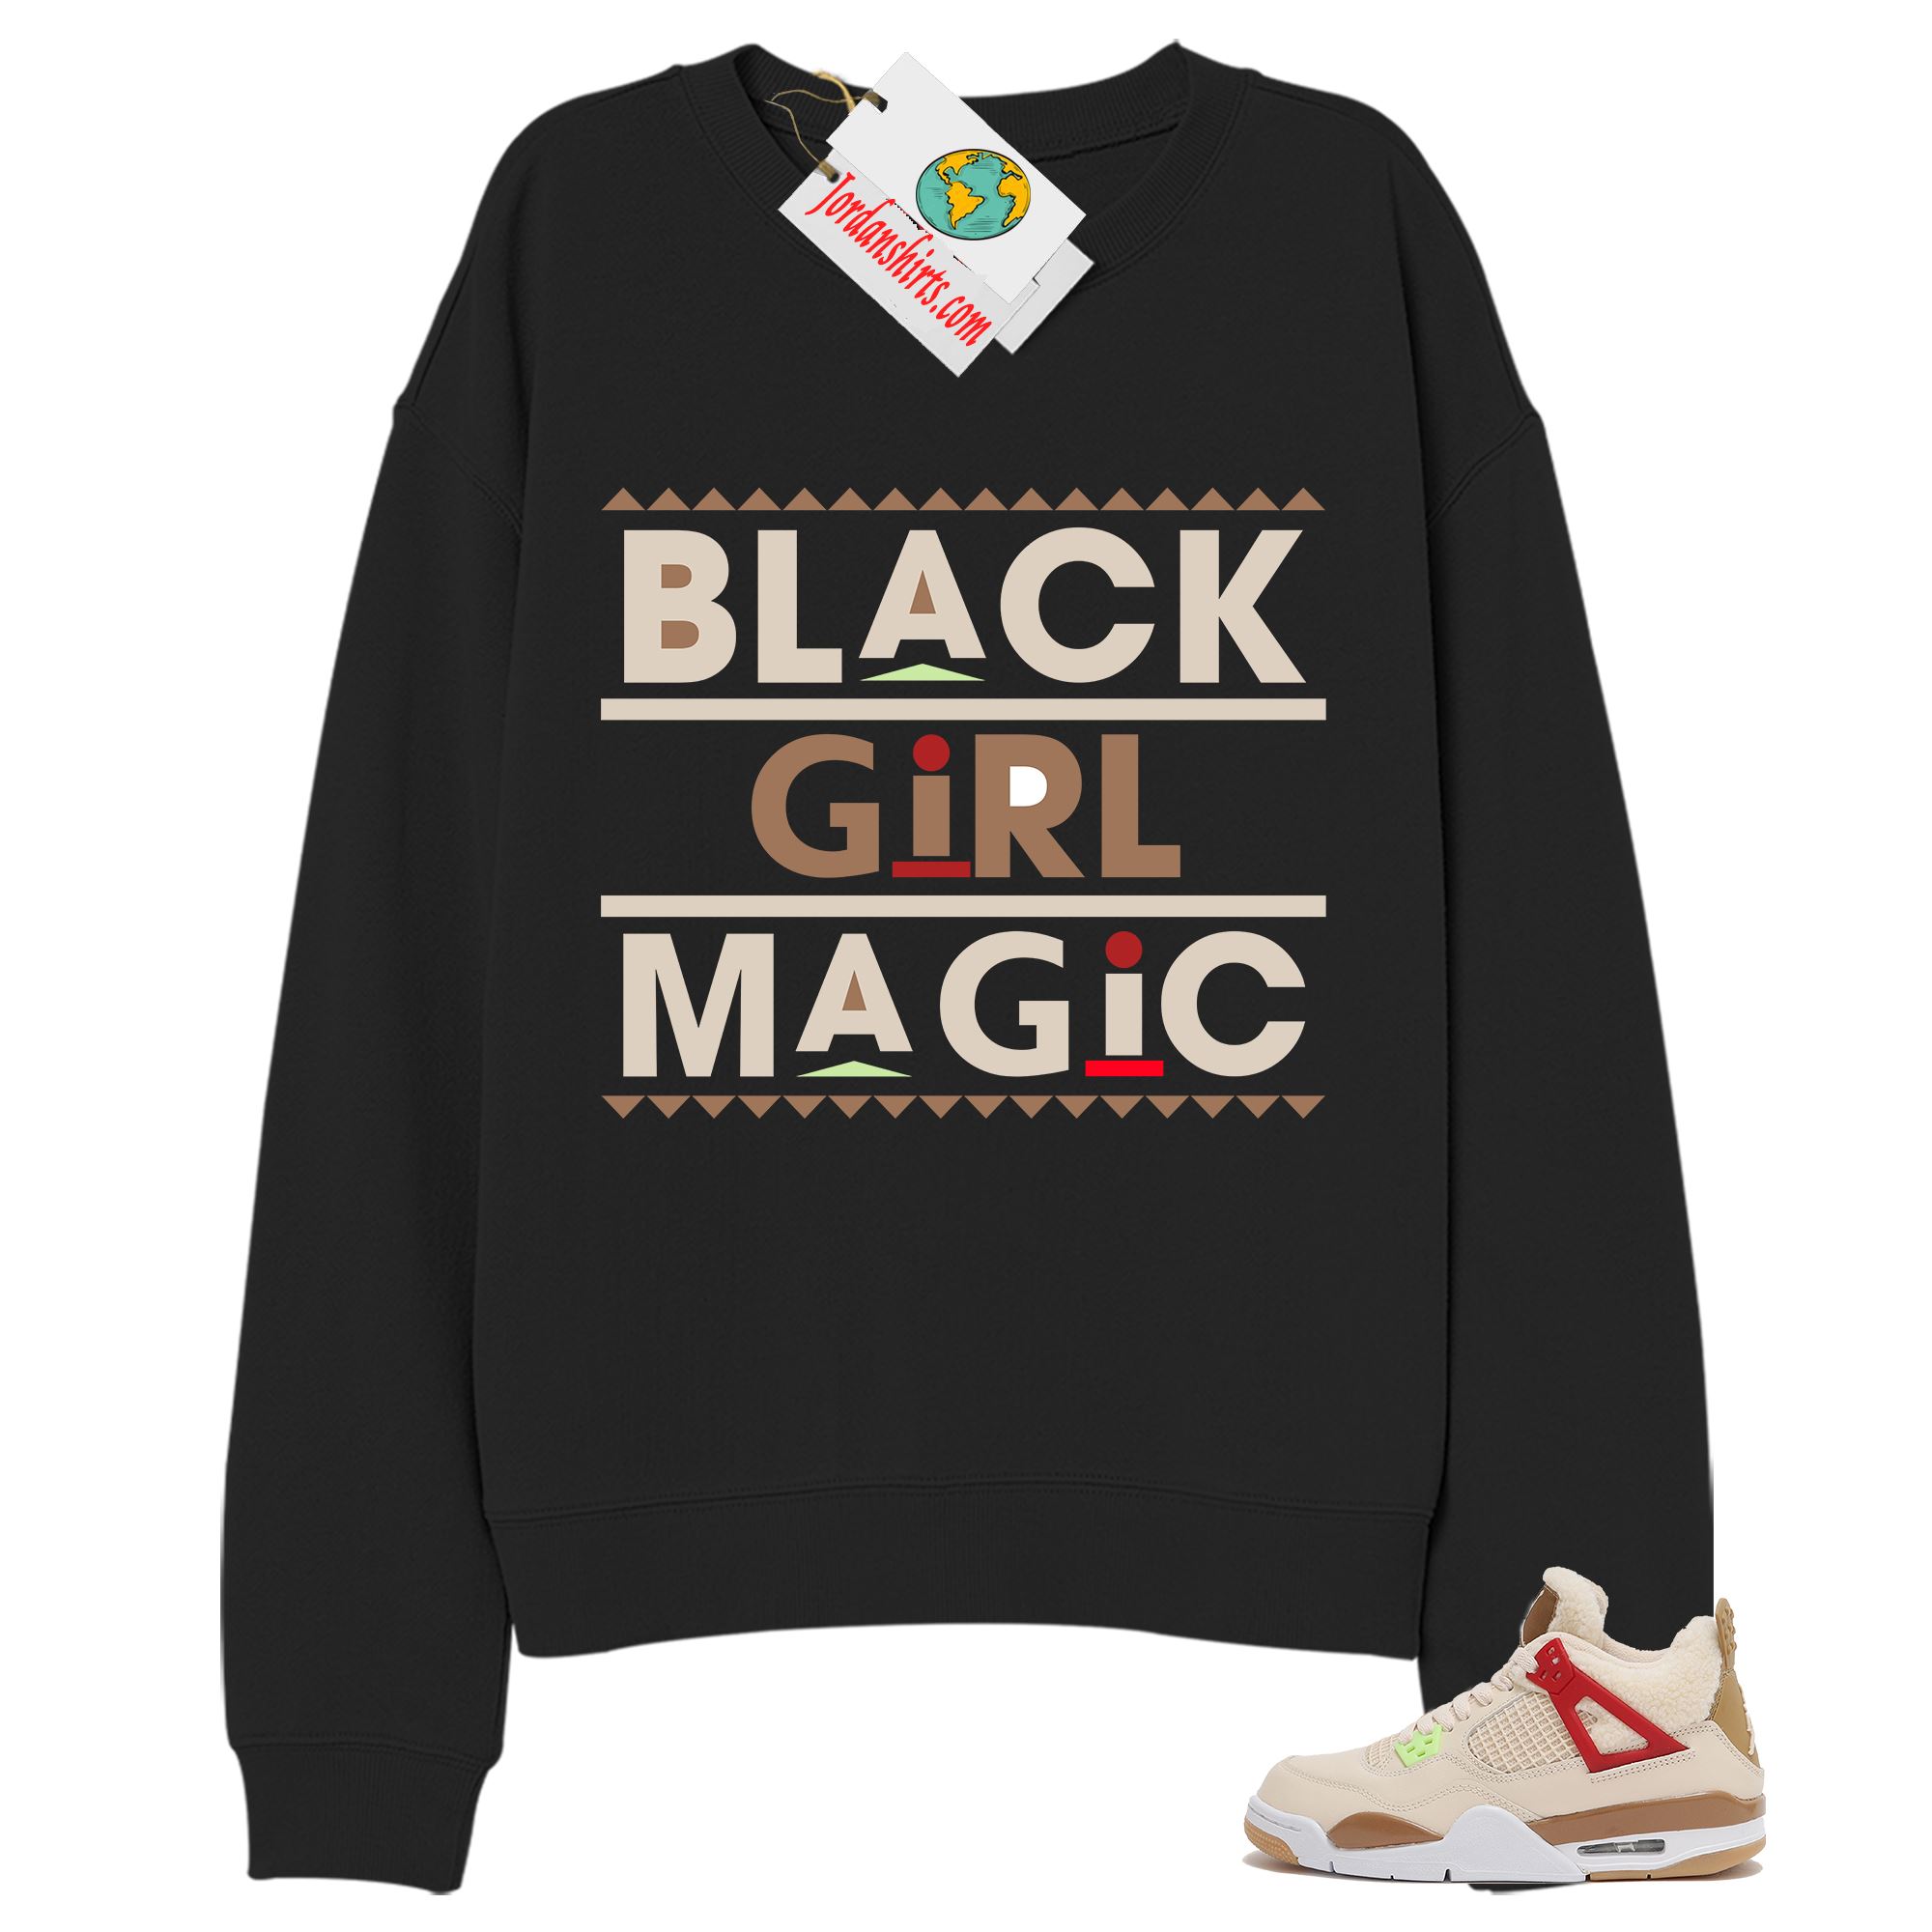 Jordan 4 Sweatshirt, Black Girl Magic Black Sweatshirt Air Jordan 4 Wild Things 4s Plus Size Up To 5xl